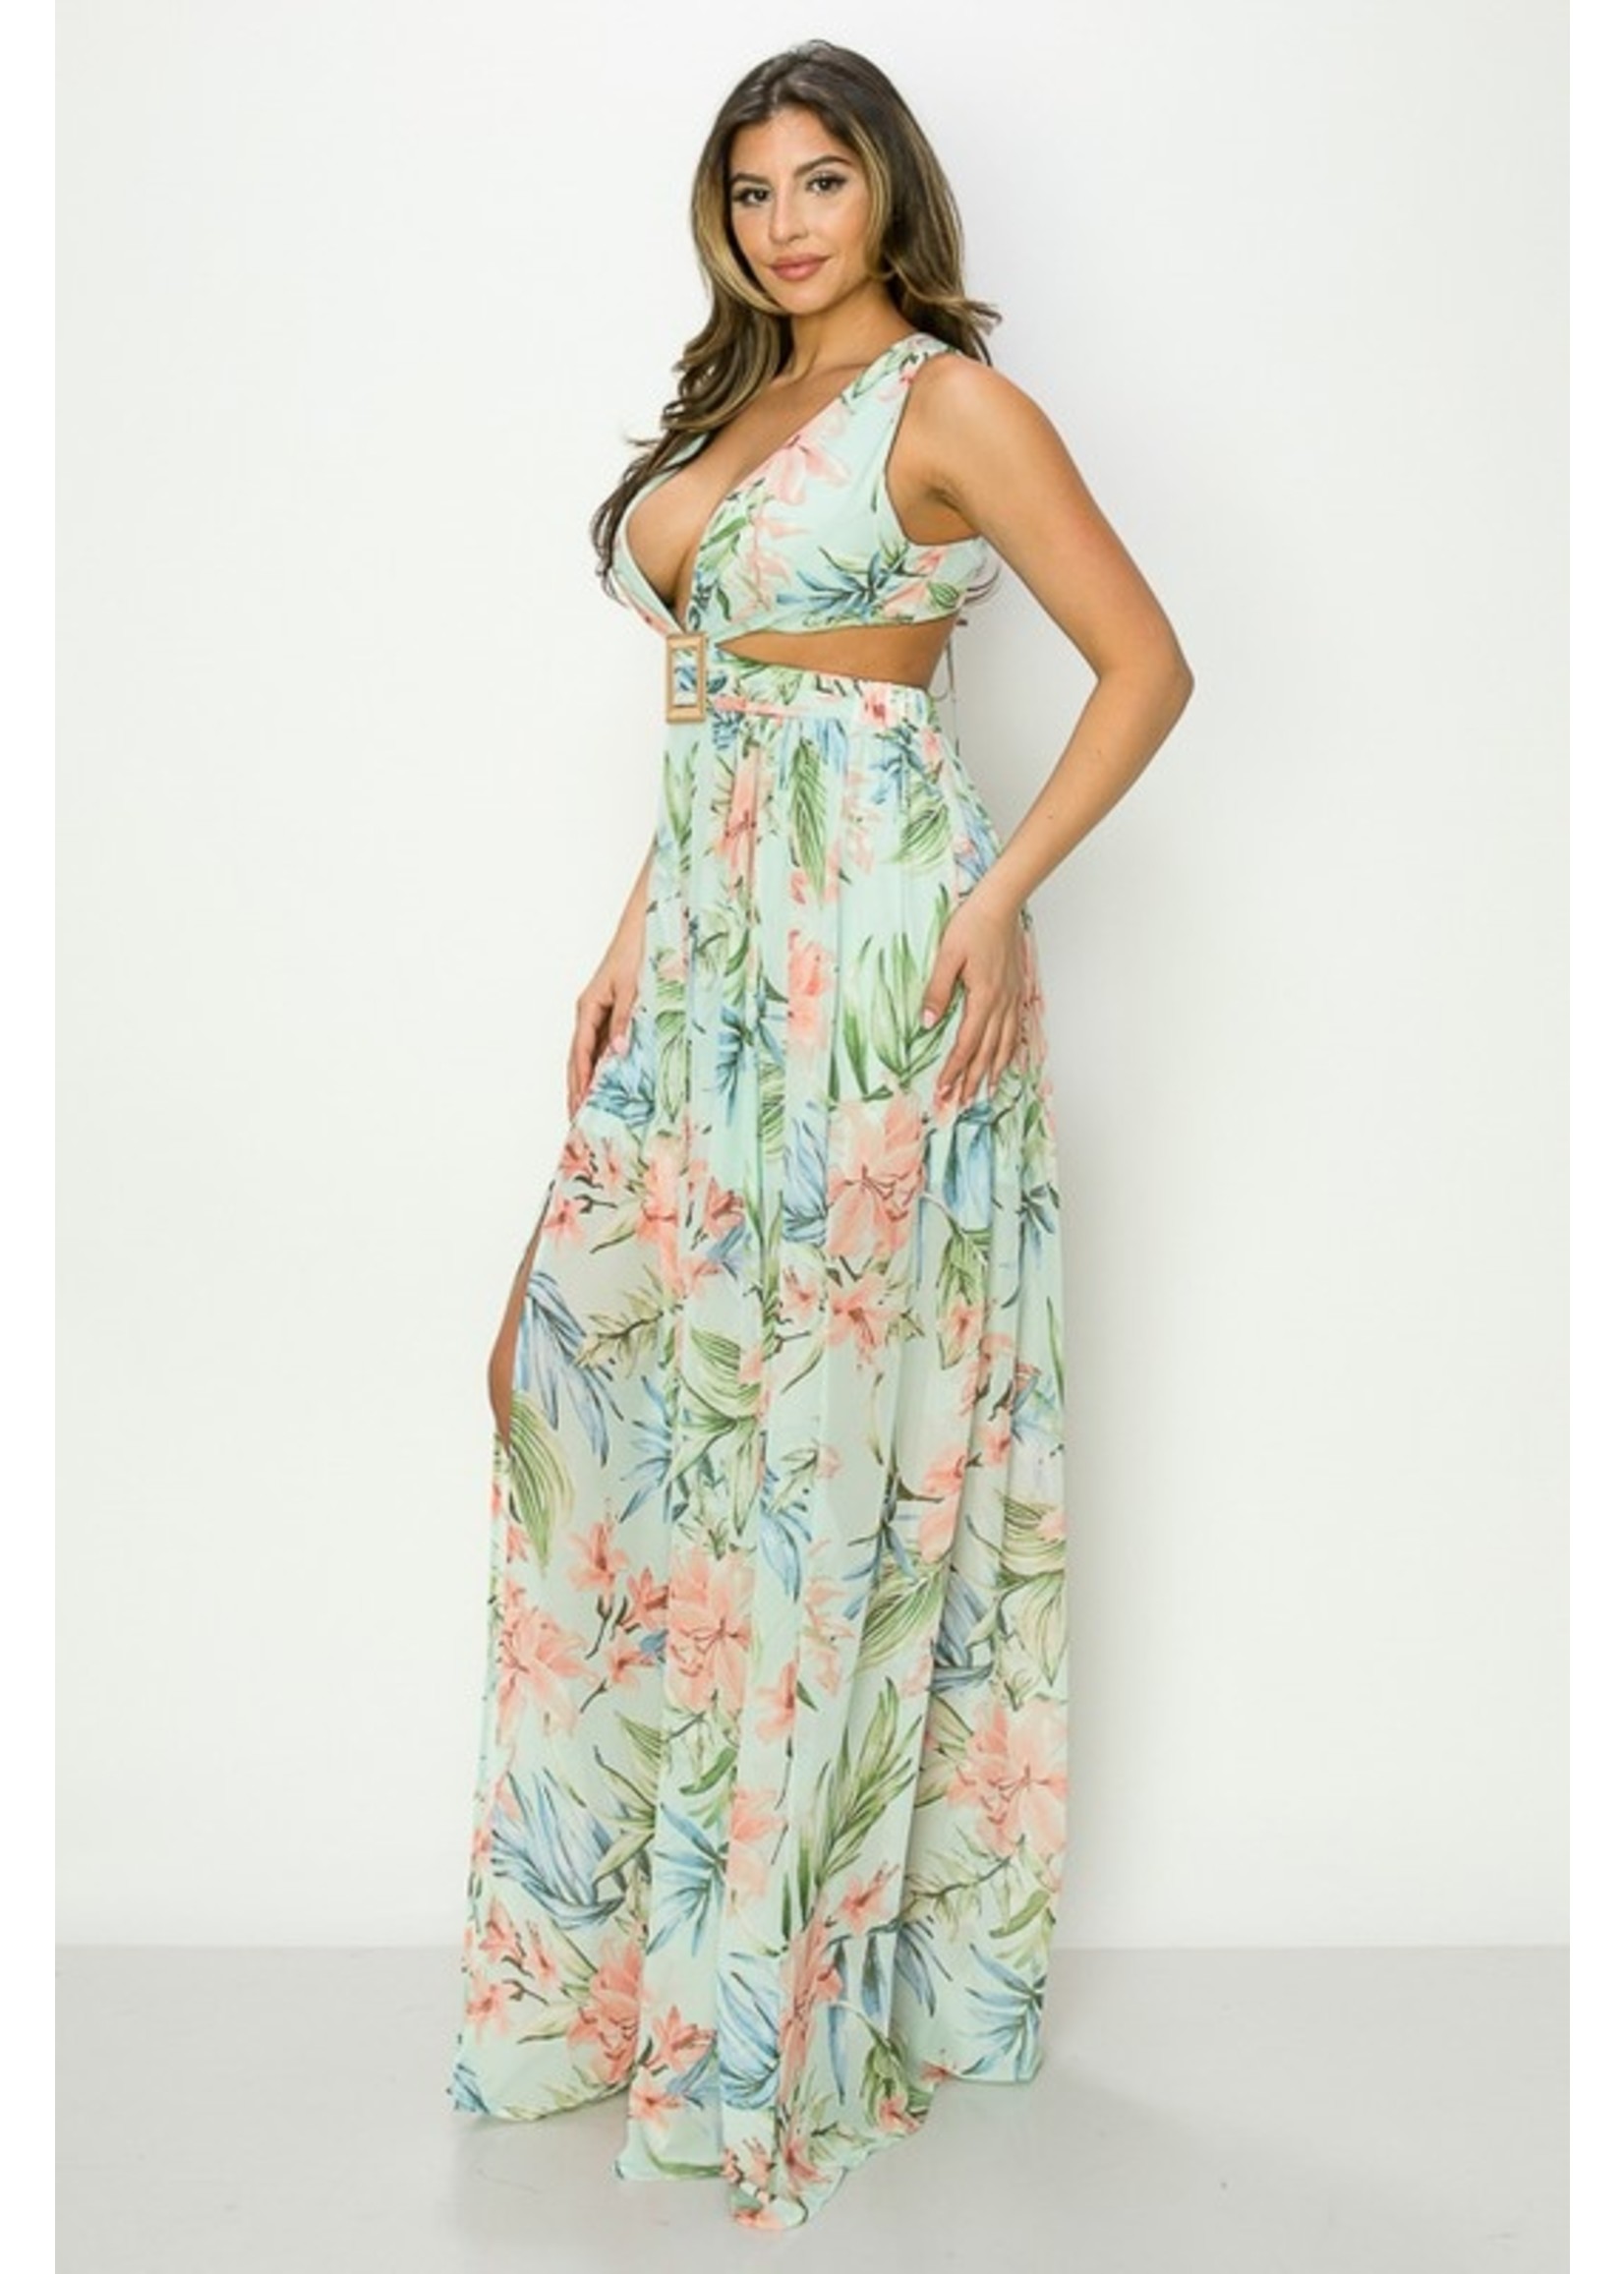 Miss Avenue Beauty By Tropics Dress Mint